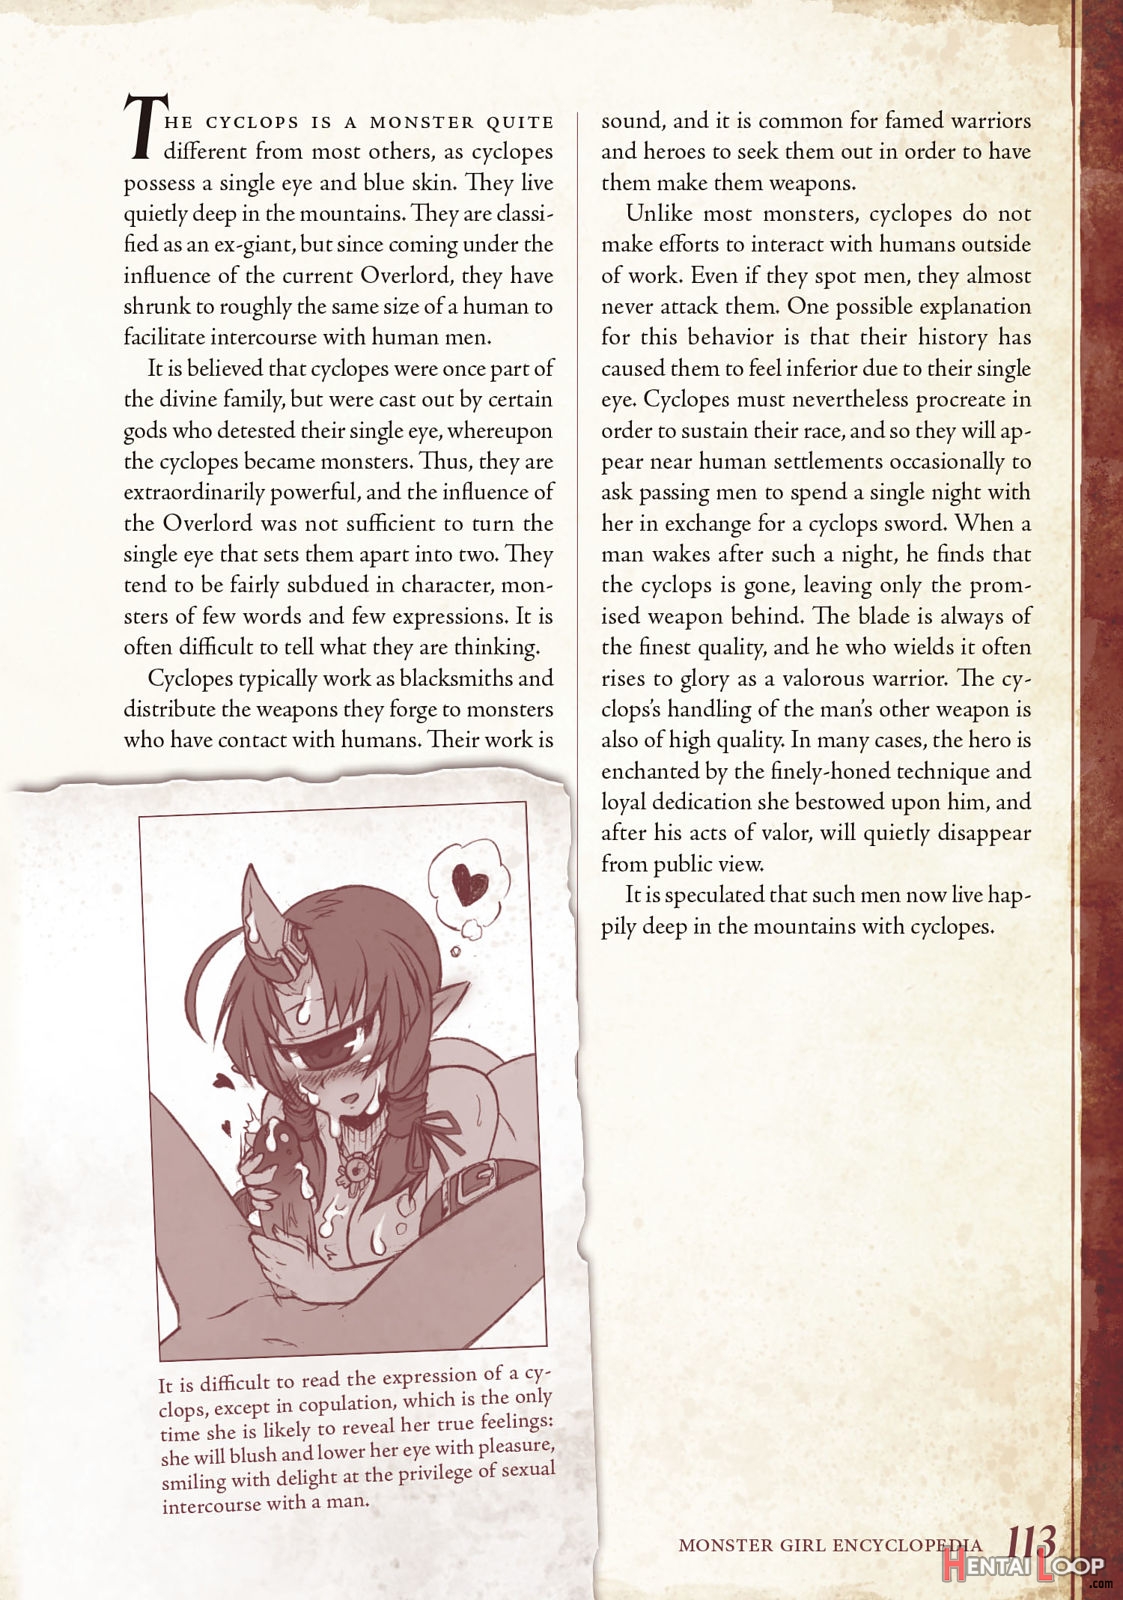 Monster Girl Encyclopedia Vol. 1 page 114